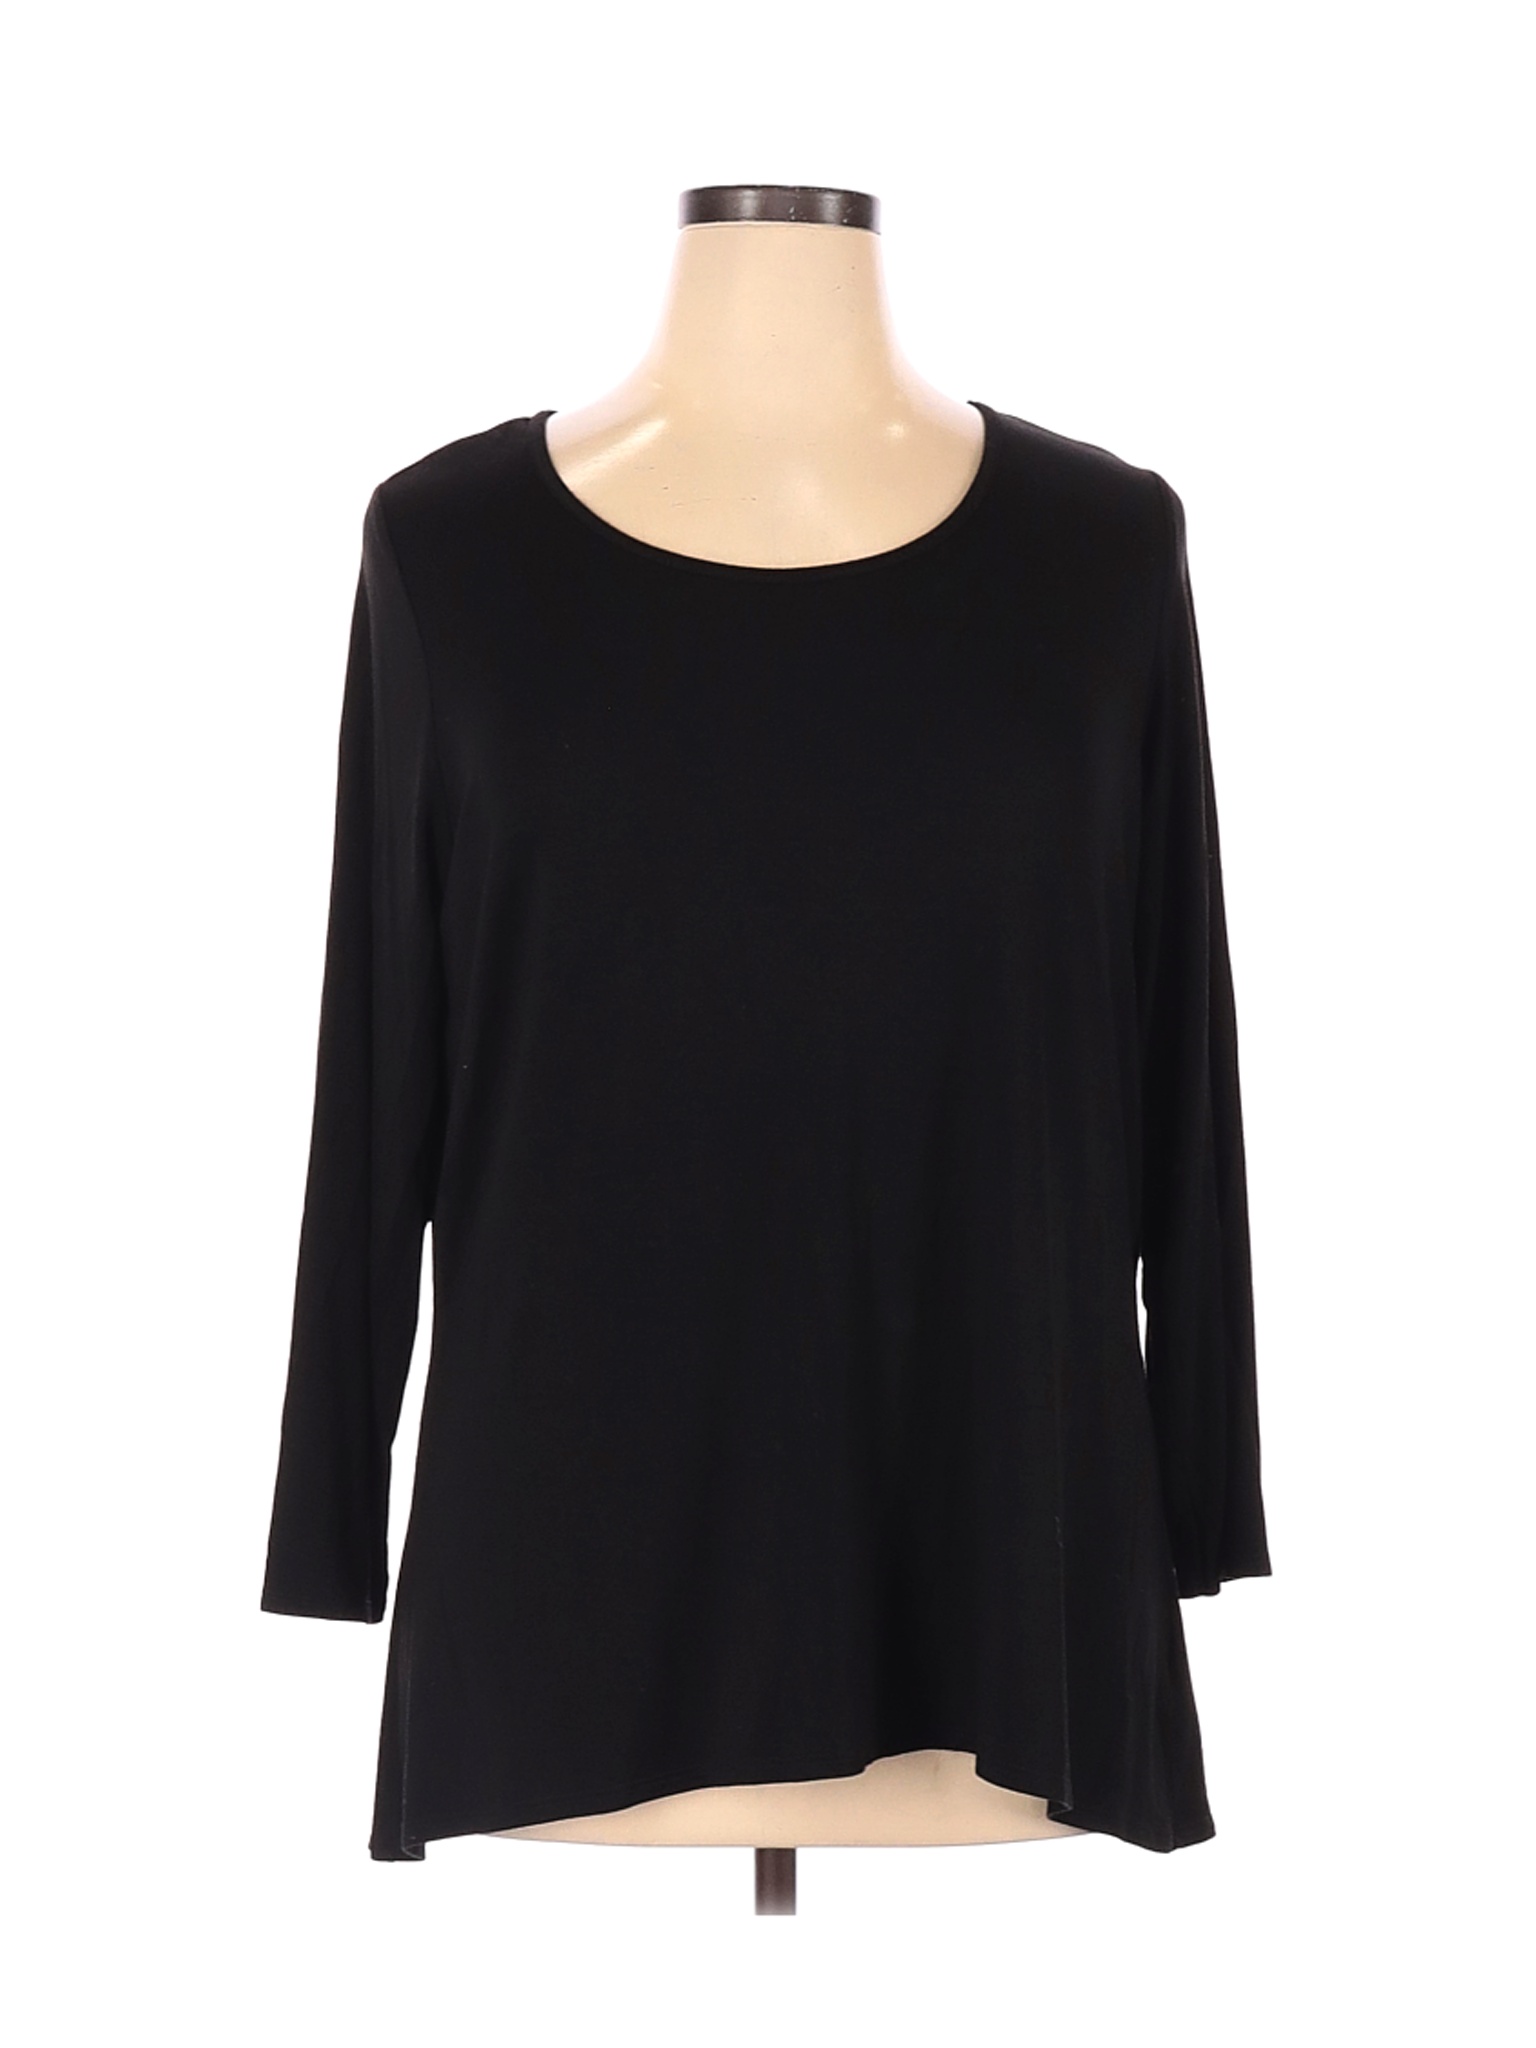 Kenar Women Black 3/4 Sleeve T-Shirt 1X Plus | eBay